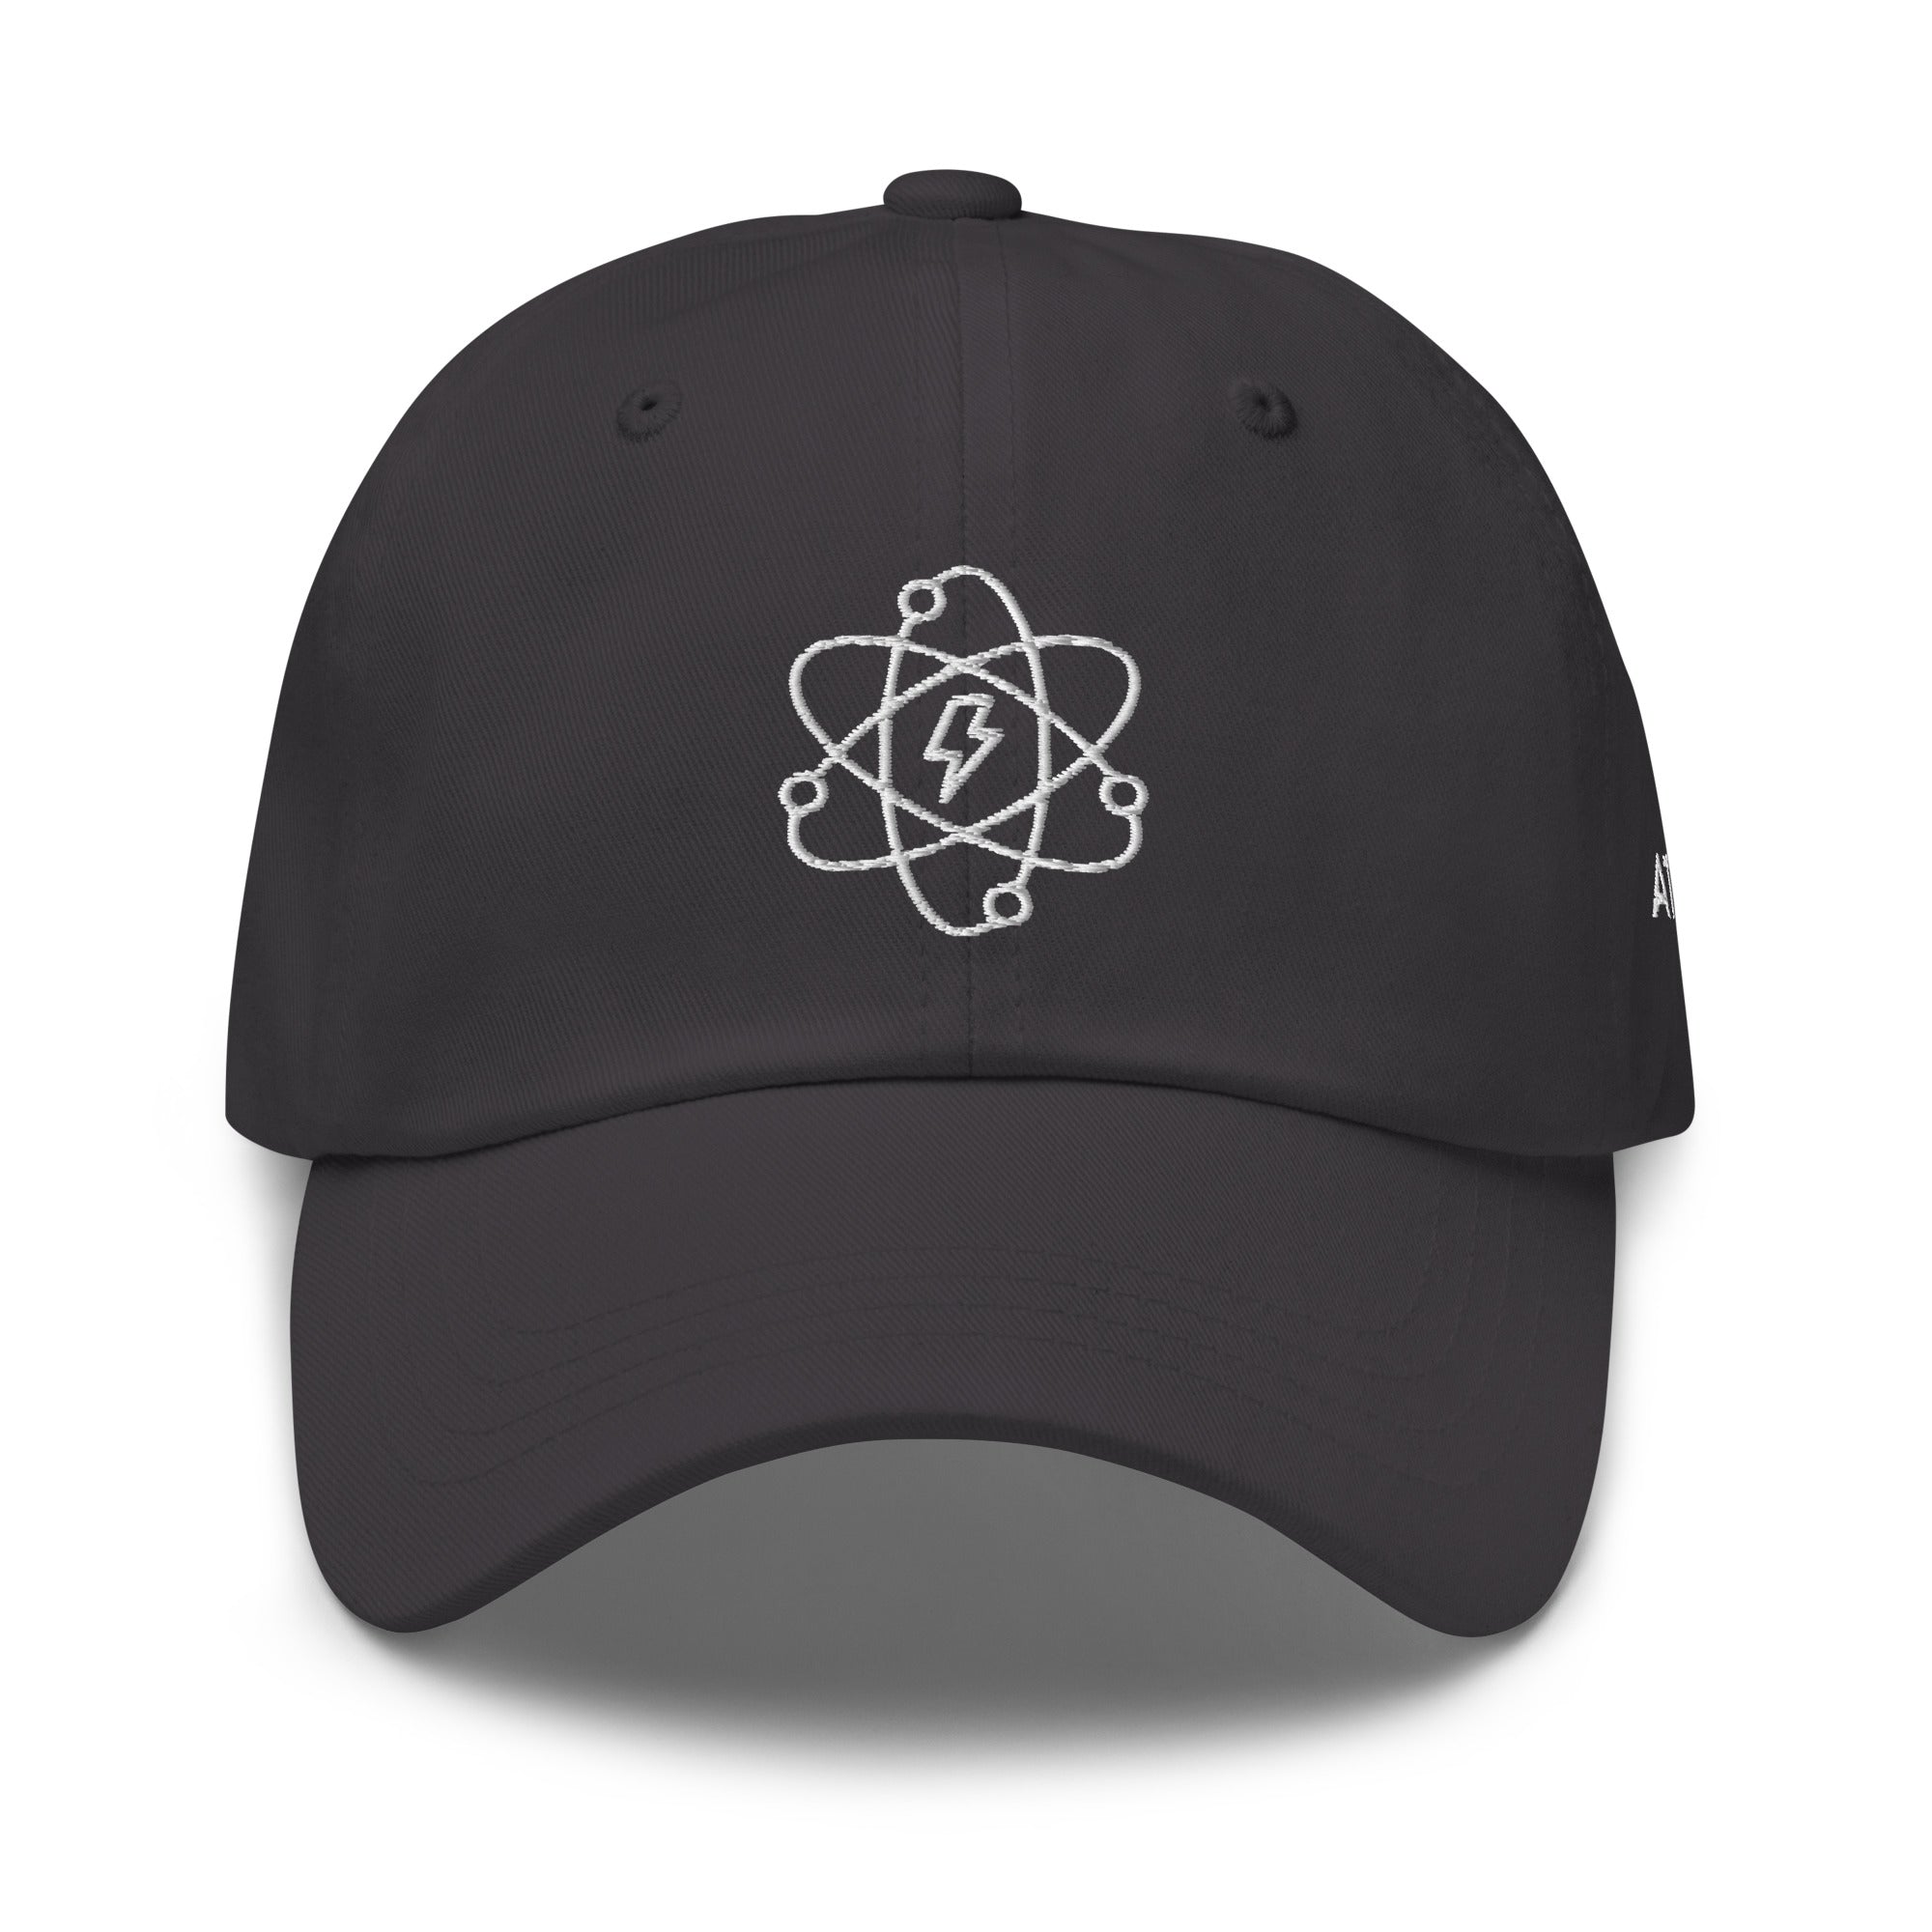 Atomical Sports Hat